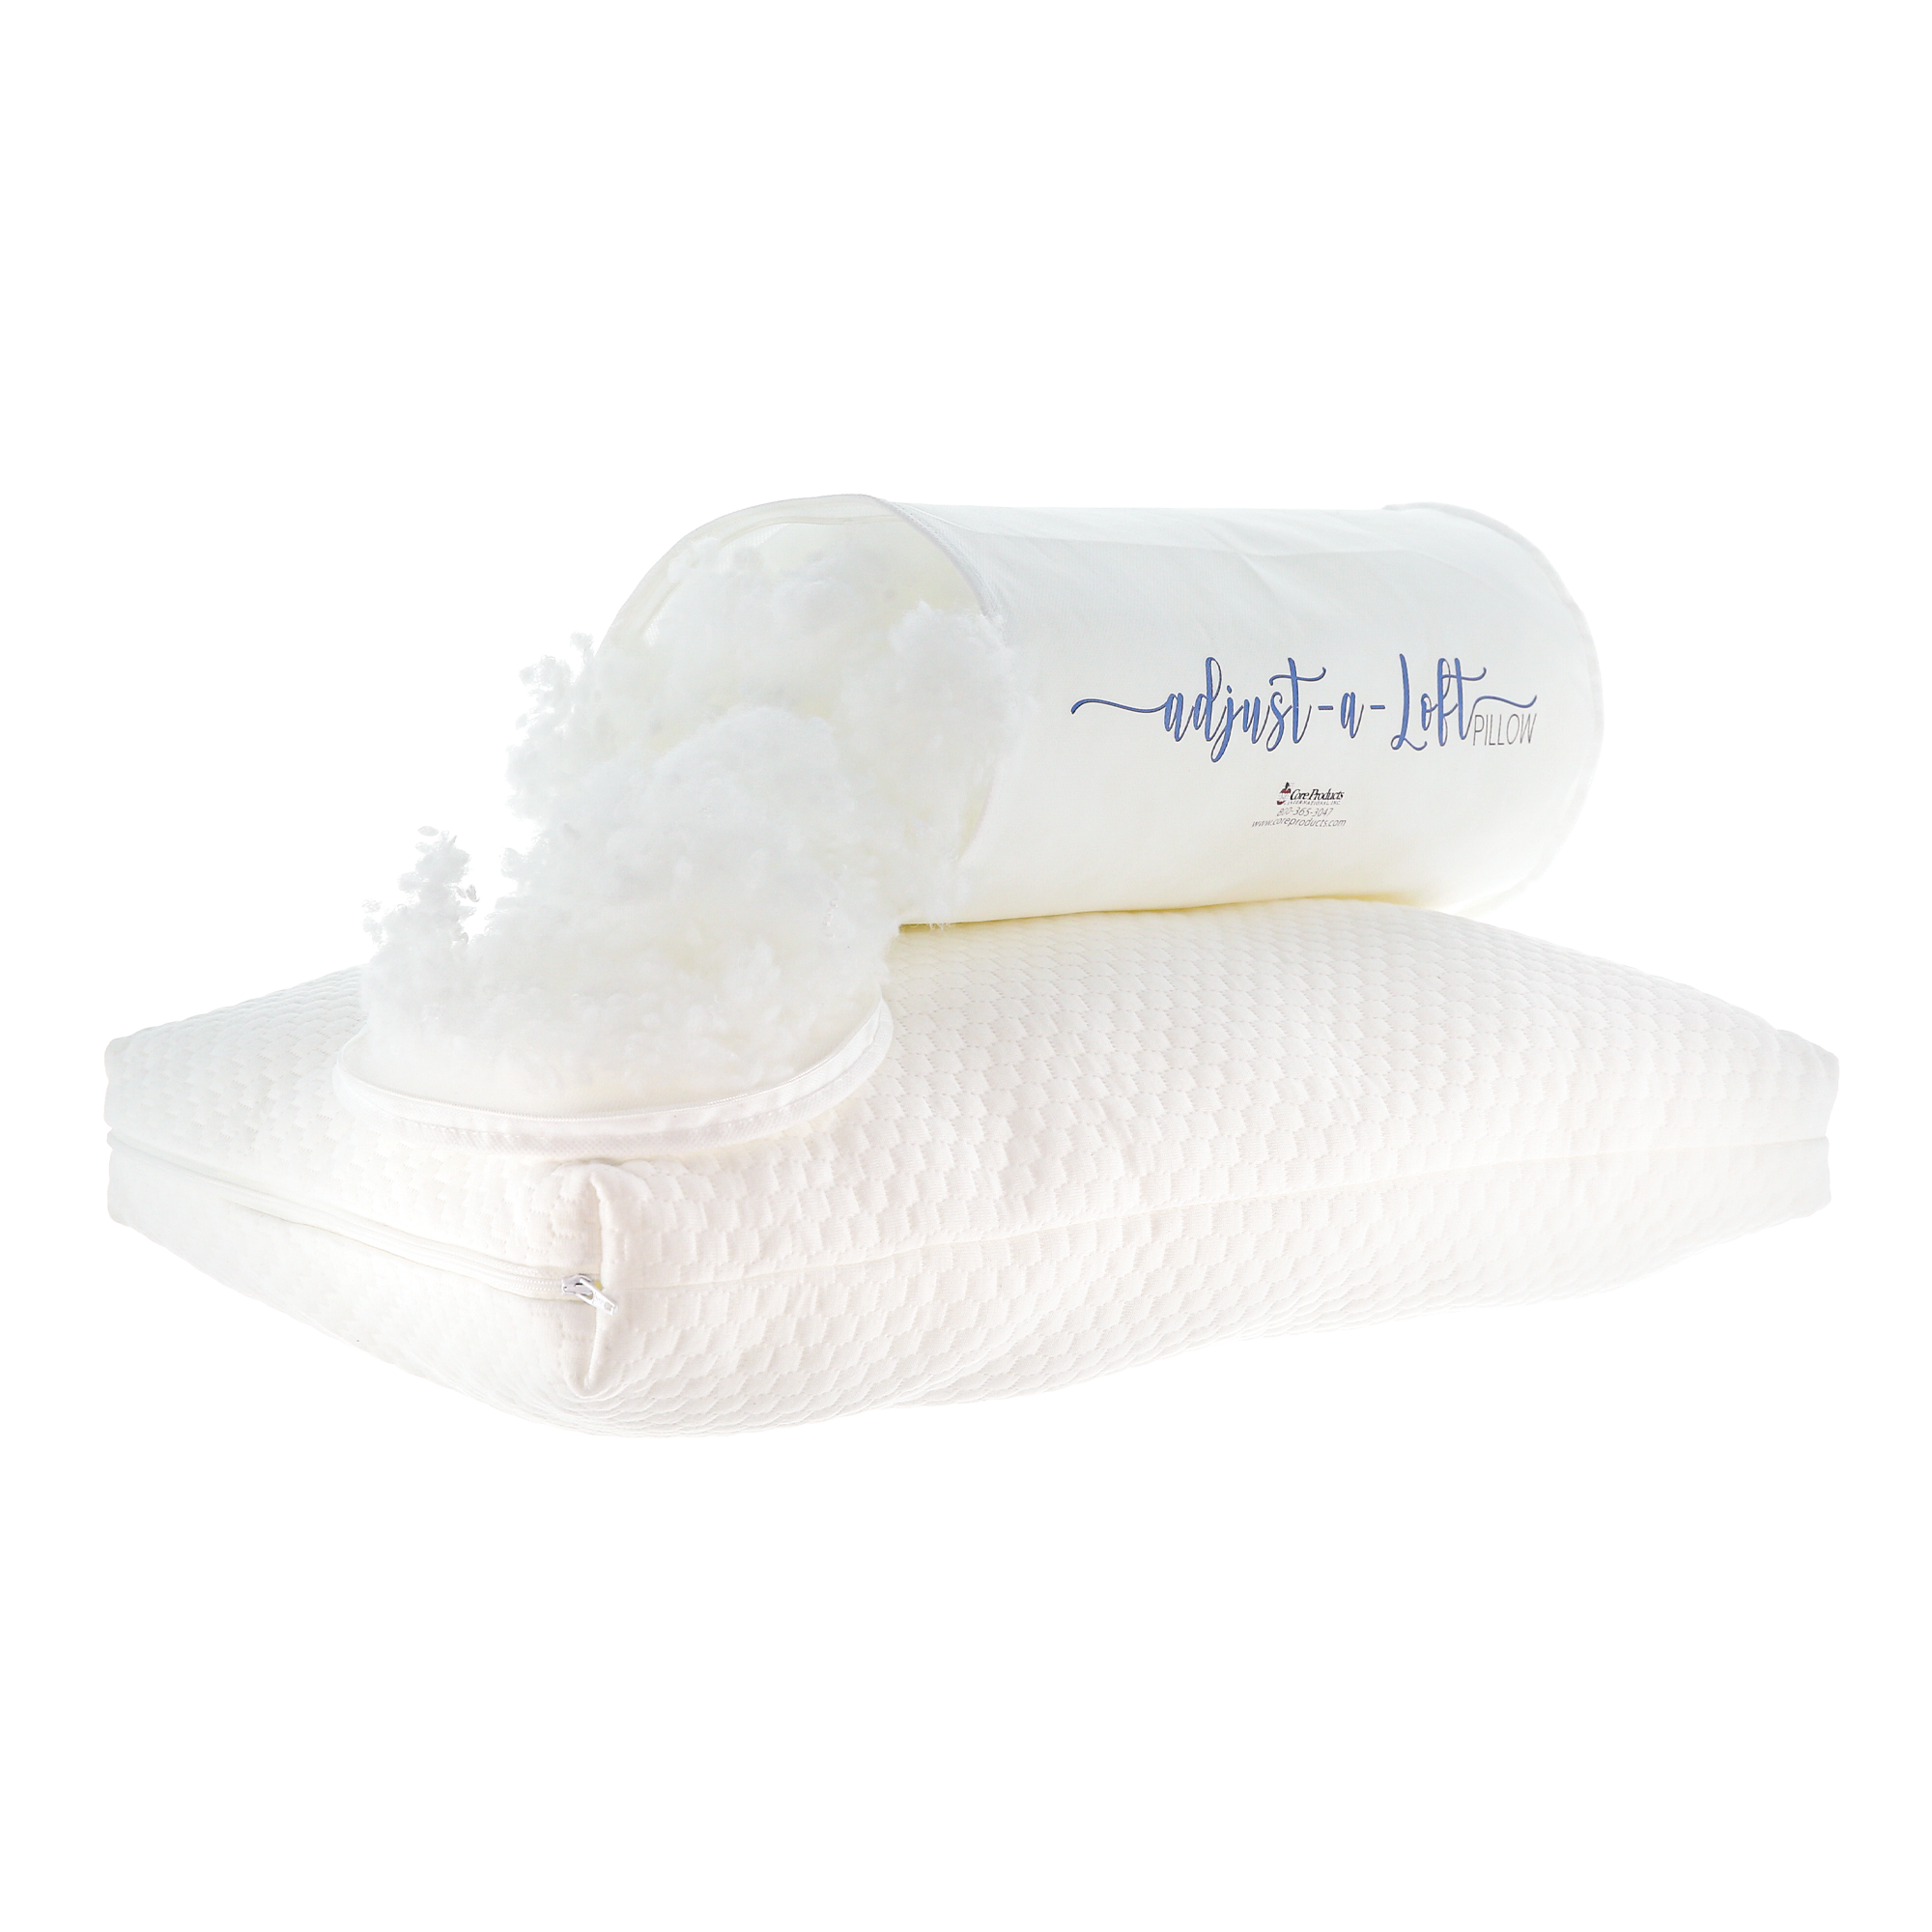 Adjust-A-Loft Fiber Adjustable Comfort Pillow with Cooling Memory Foam Insert, Standard/Full